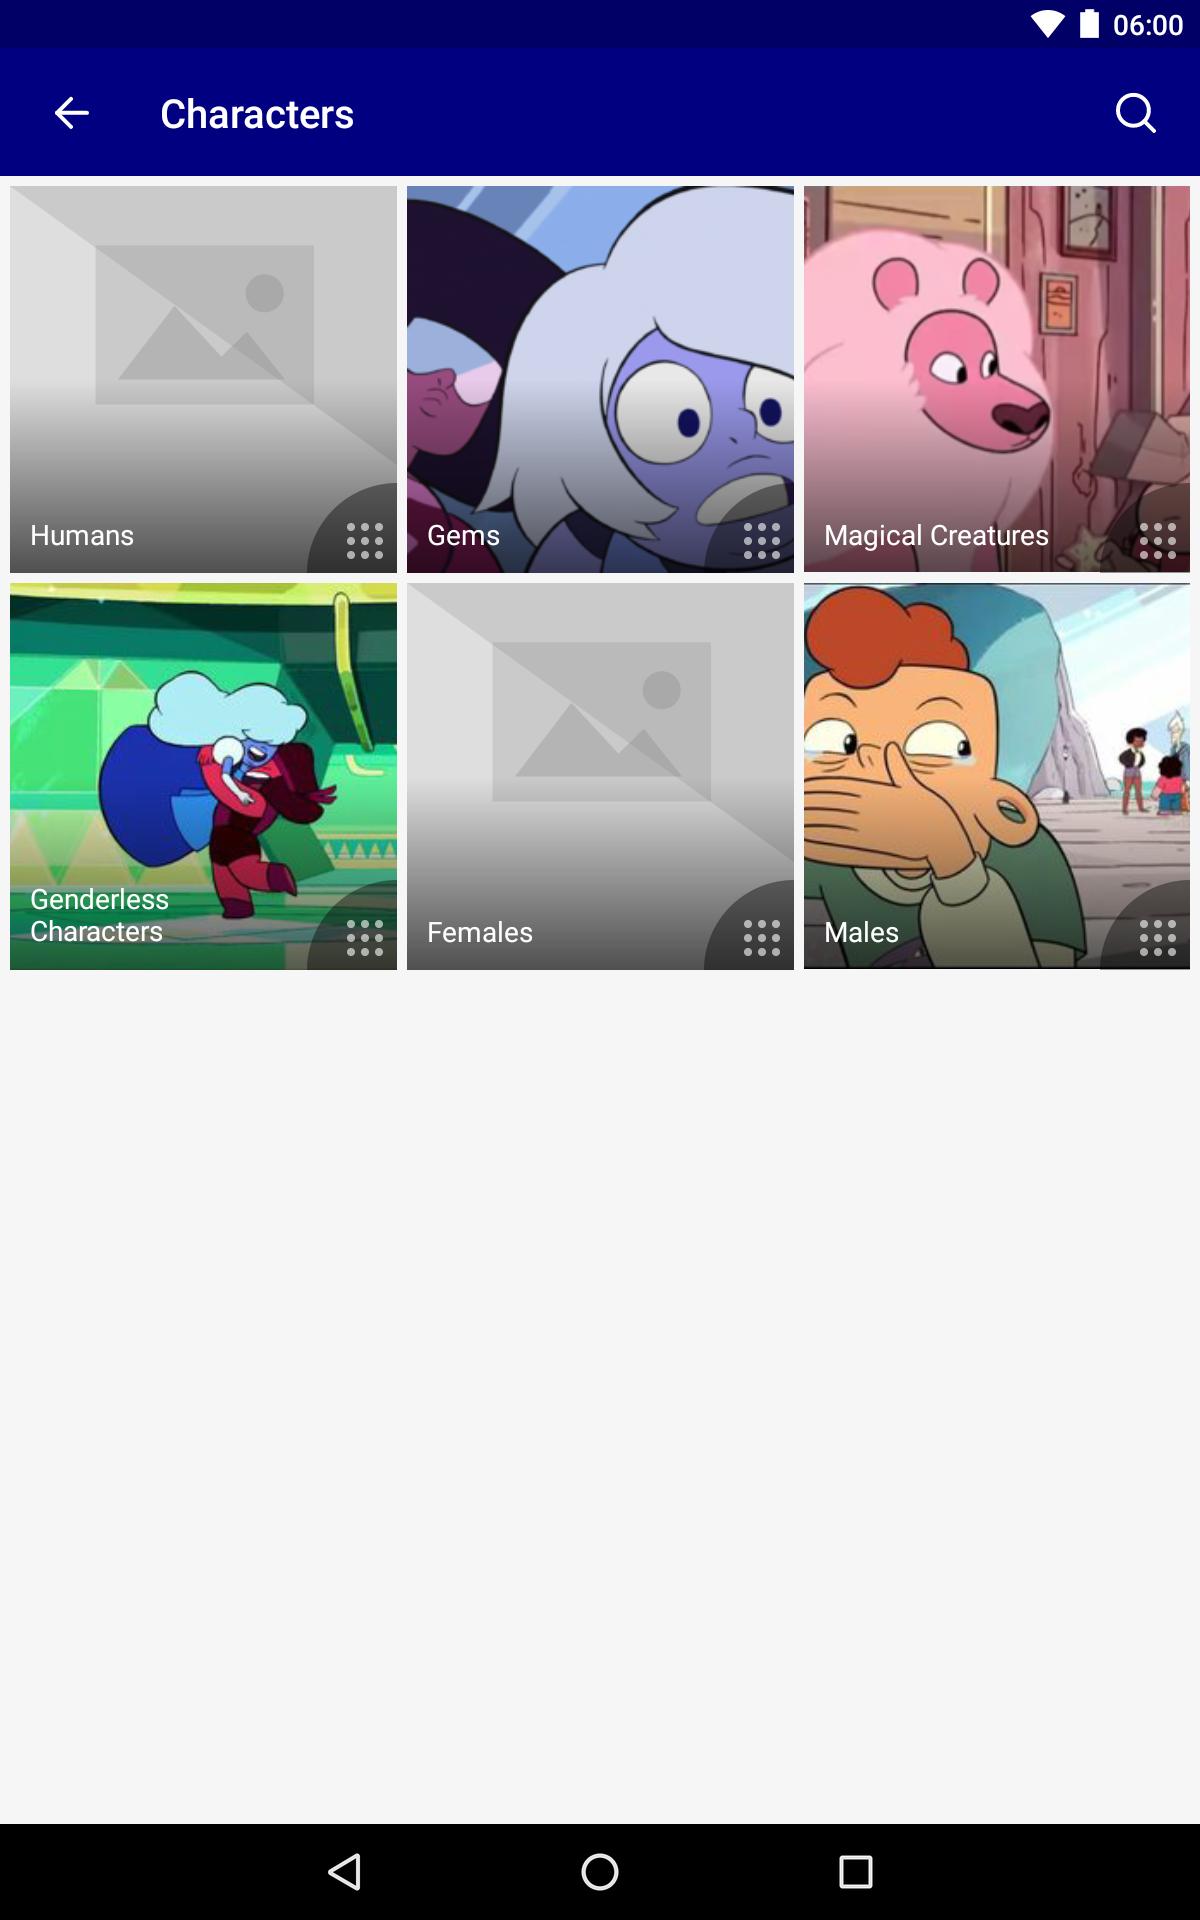 Fandom For Steven Universe For Android Apk Download - steven universe homeworld roblox gem codes